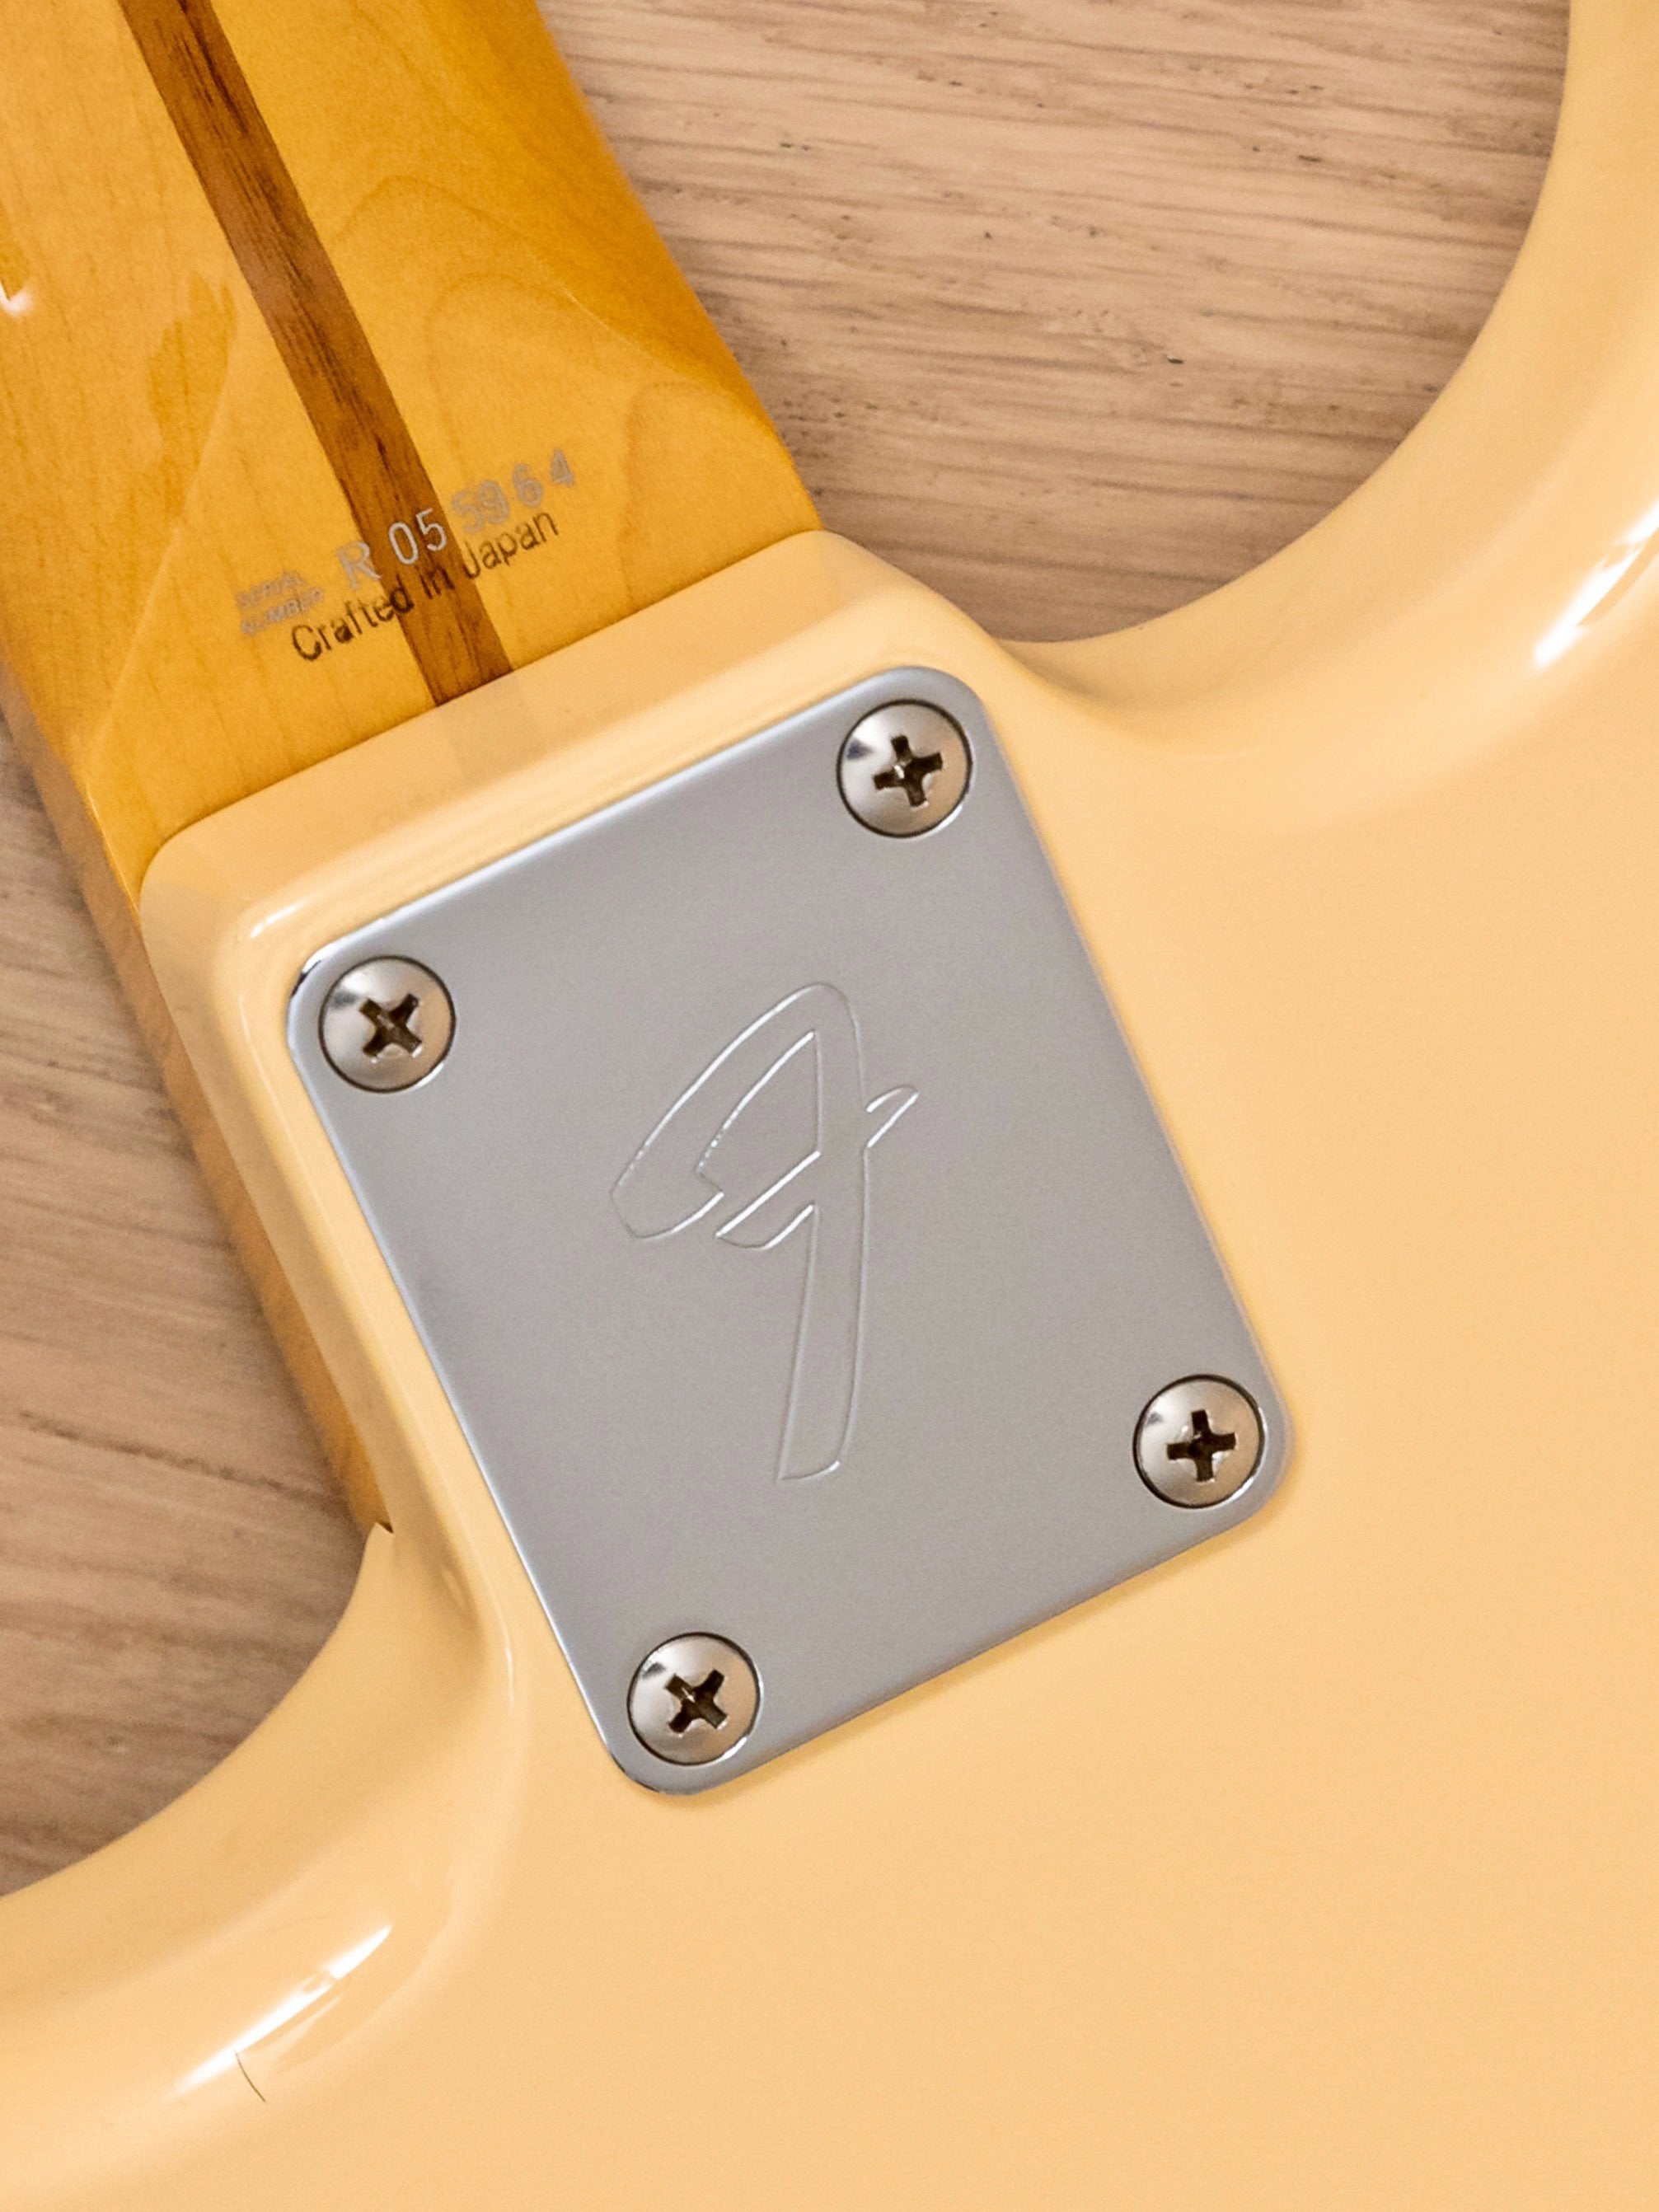 2005 Fender Yngwie Malmsteen Stratocaster ST71-140YM Yellow White w/ USA Noiseless & Tweed Case, Japan CIJ